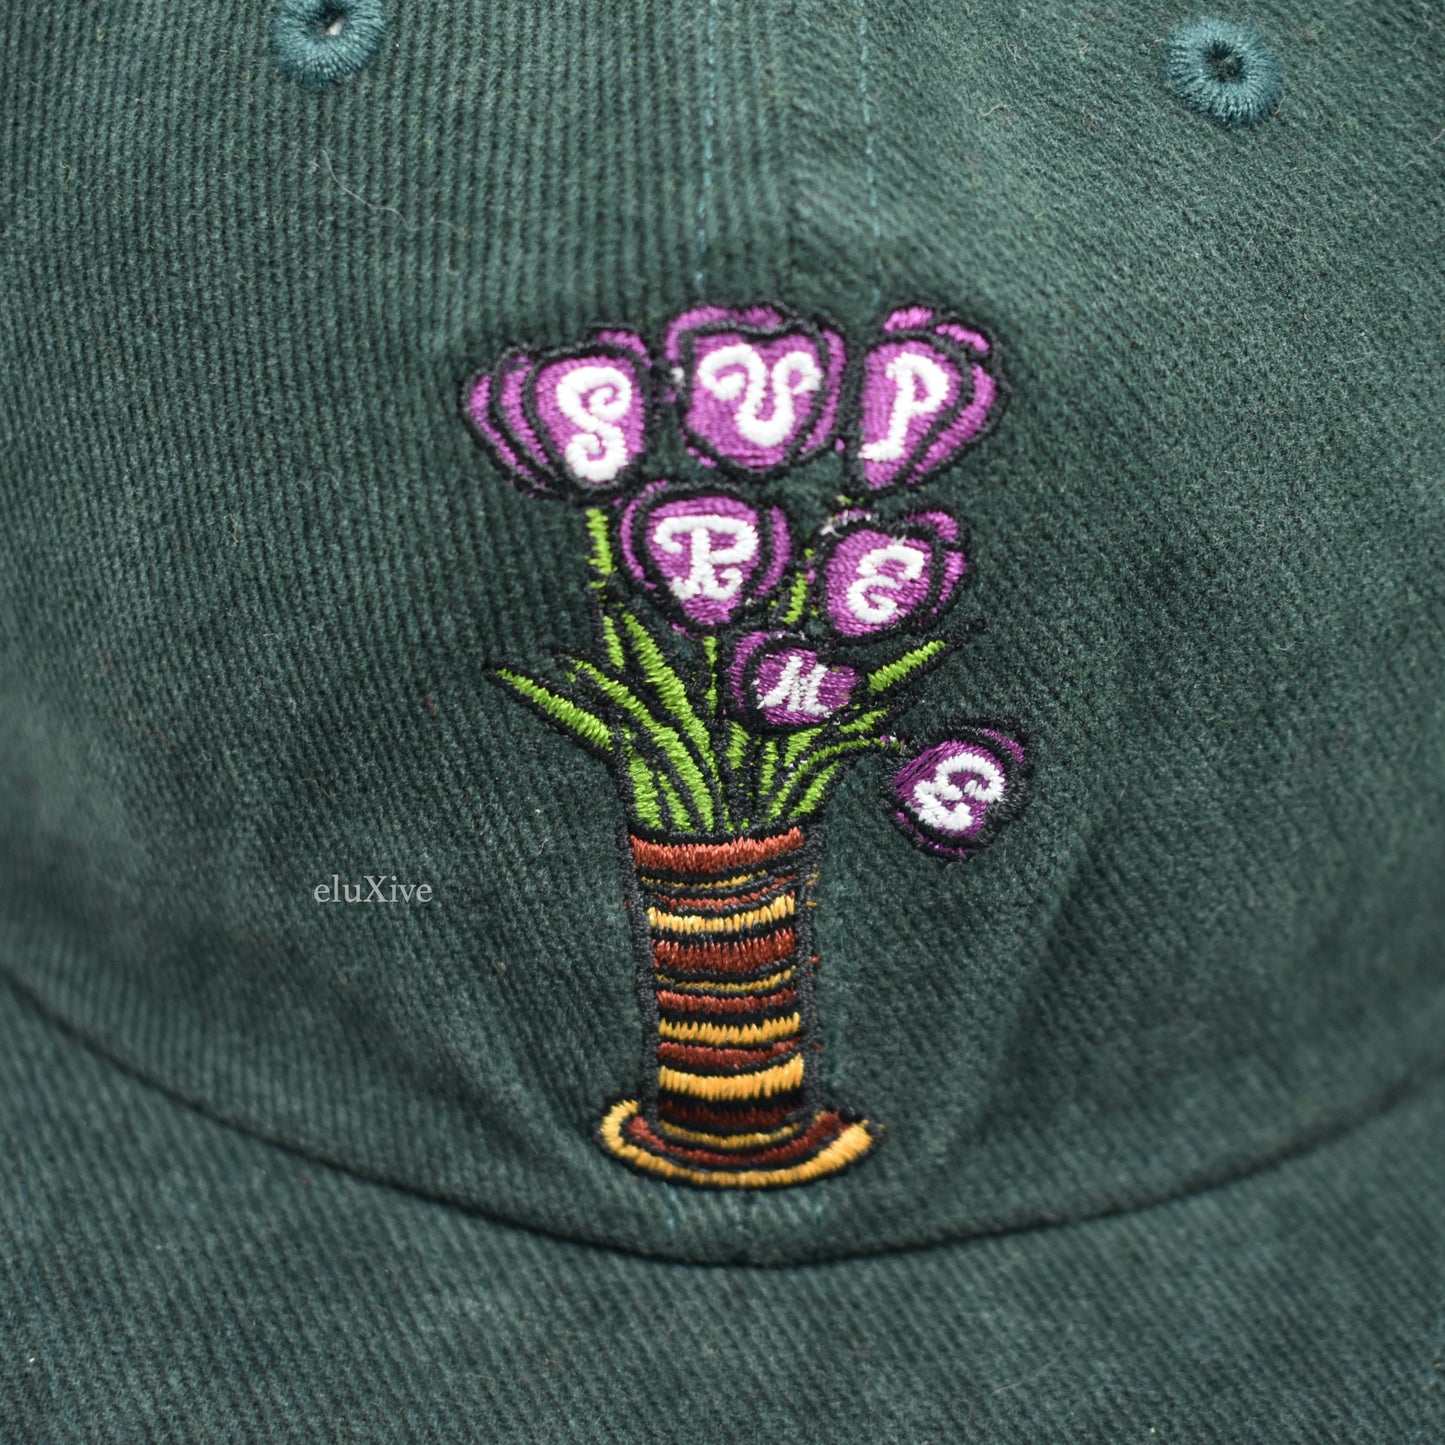 Supreme - Dark Green Flowers Logo Embroidered 6-Panel Hat (SS18)